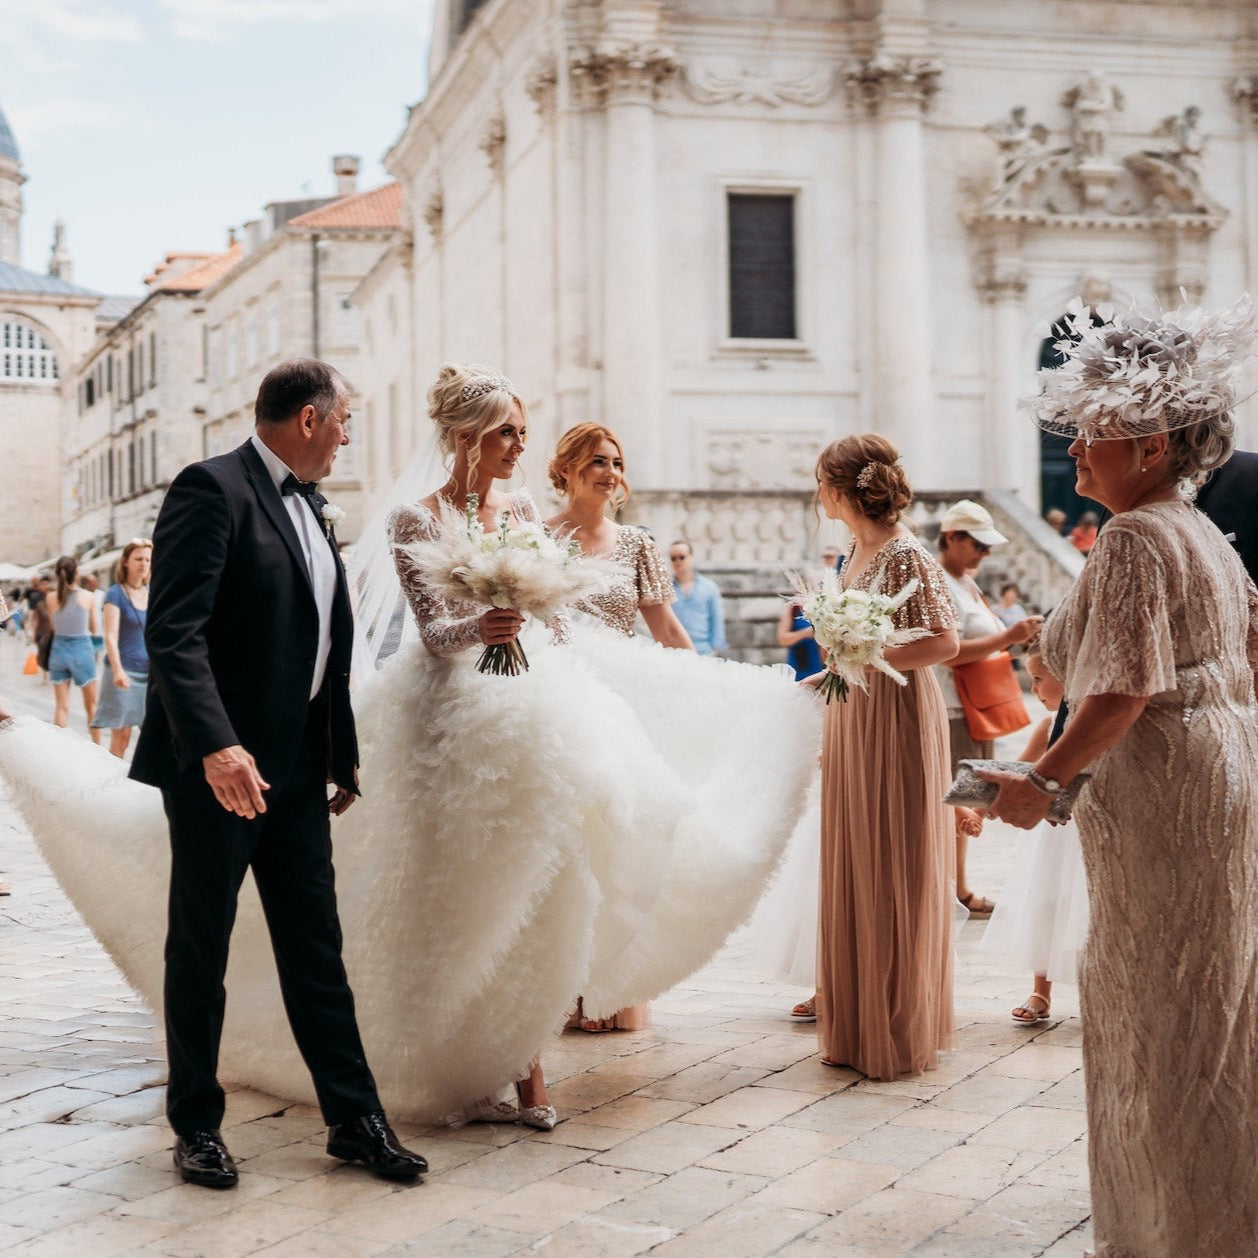 Shoot a wedding with us | Santorini, Greece - Photo & Cinema